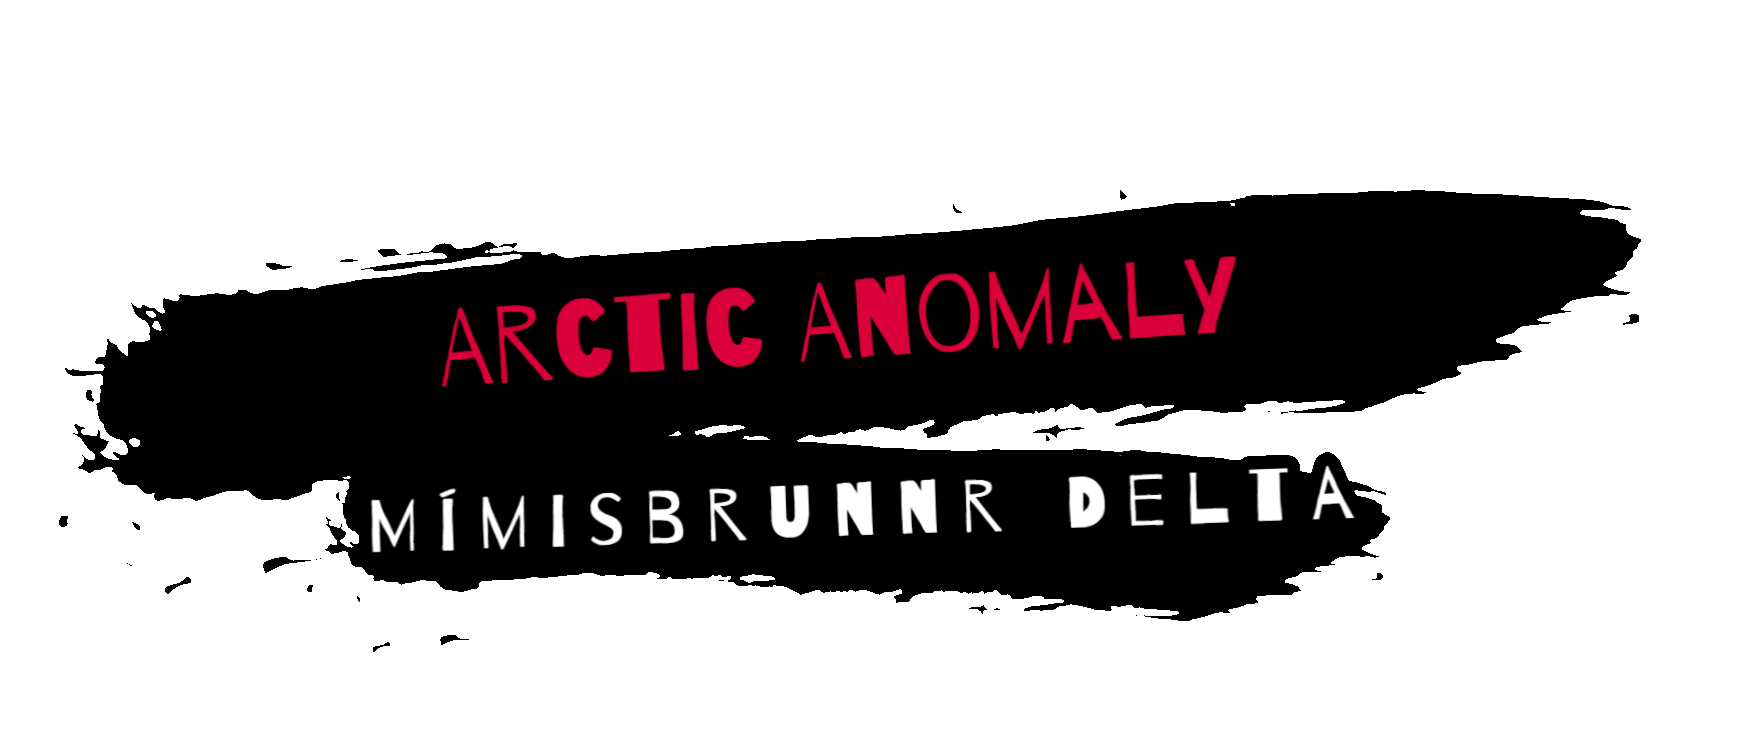 Arctic Anomaly: Mimisbrunnr Delta